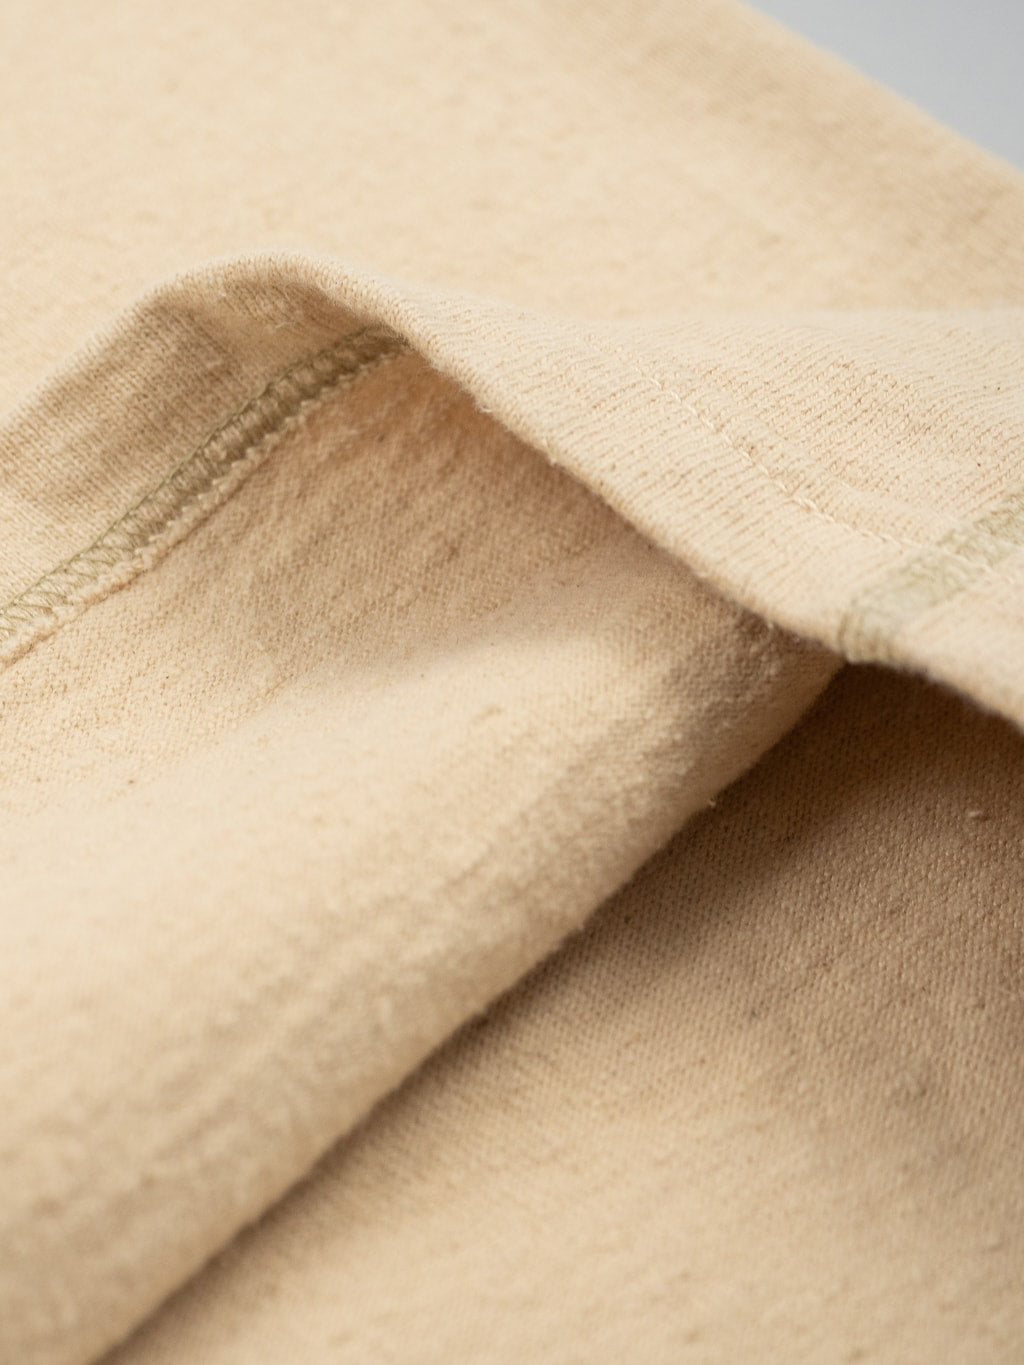 samurai jeans japanese cotton slub crew neck tshirt kuri interior detail